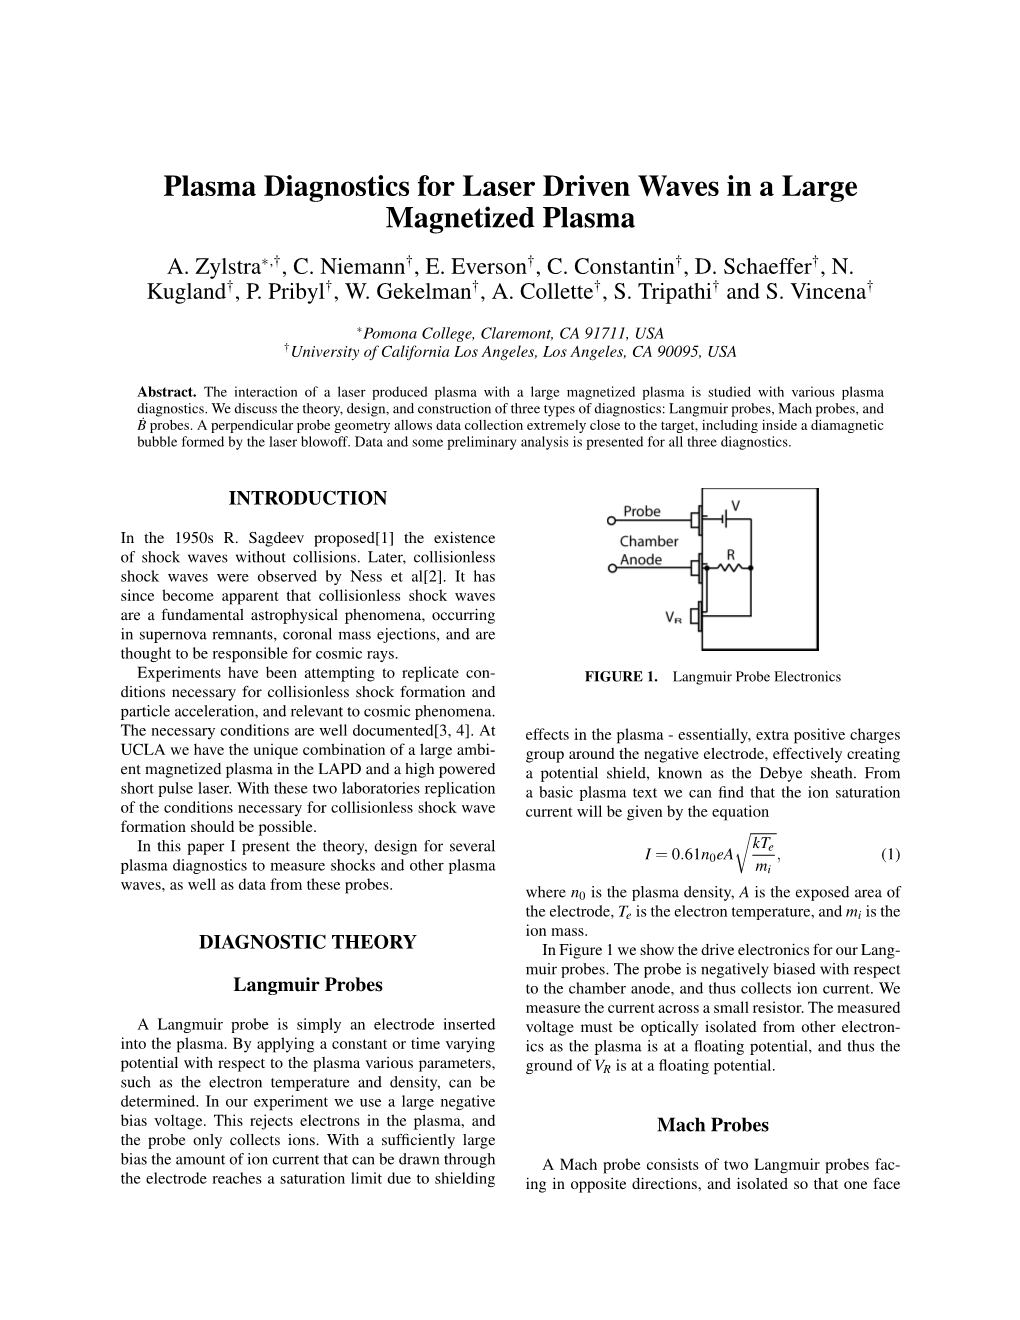 Plasma Diagnostics for Laser Driven Waves in a Large Magnetized Plasma A